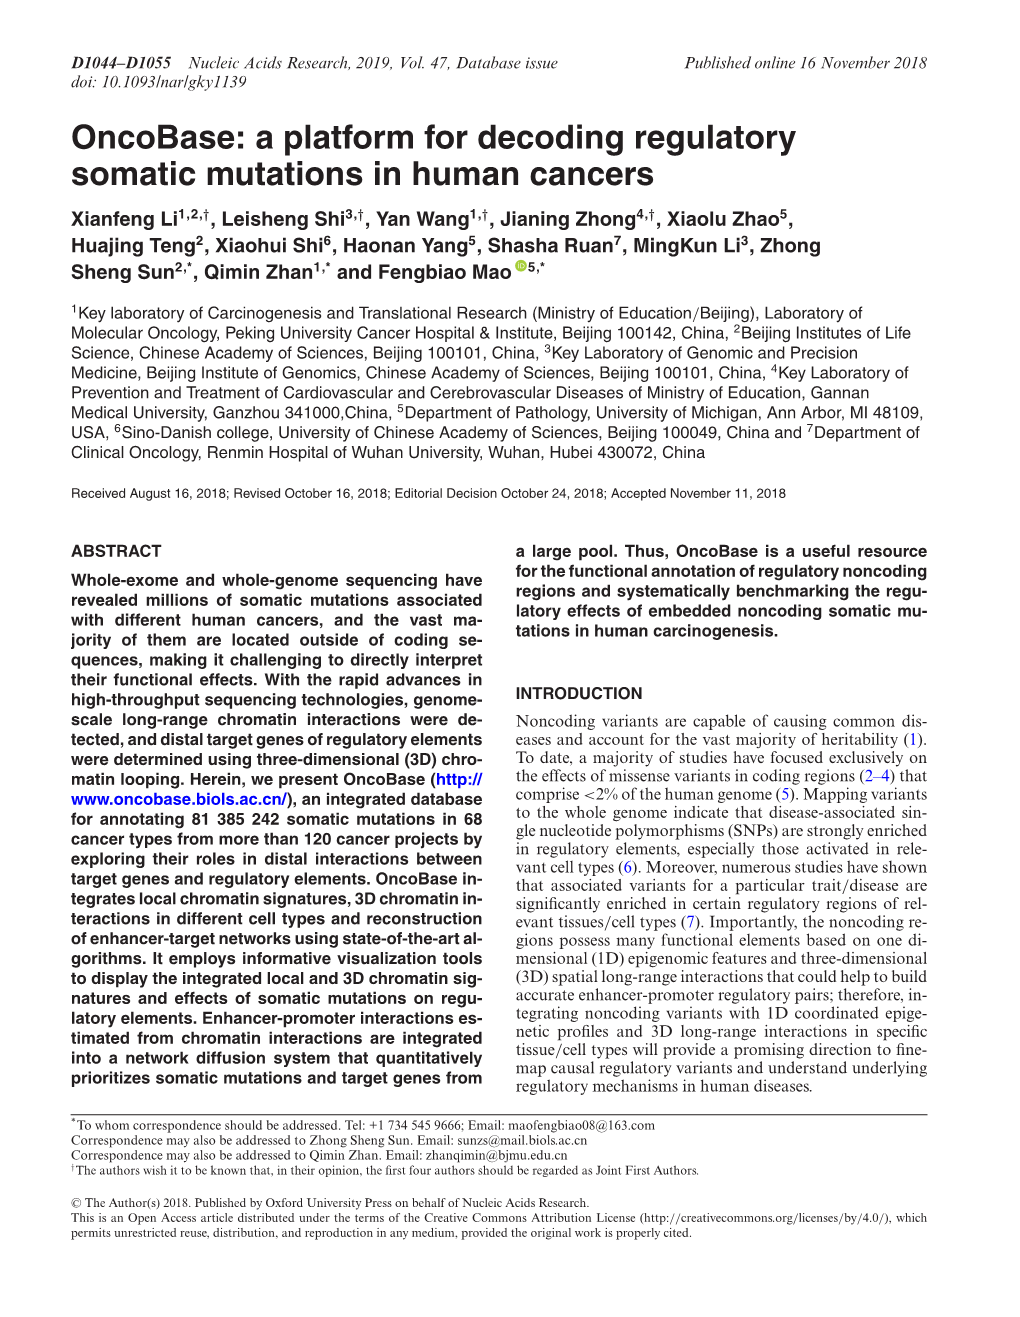 A Platform for Decoding Regulatory Somatic Mutations in Human Cancers